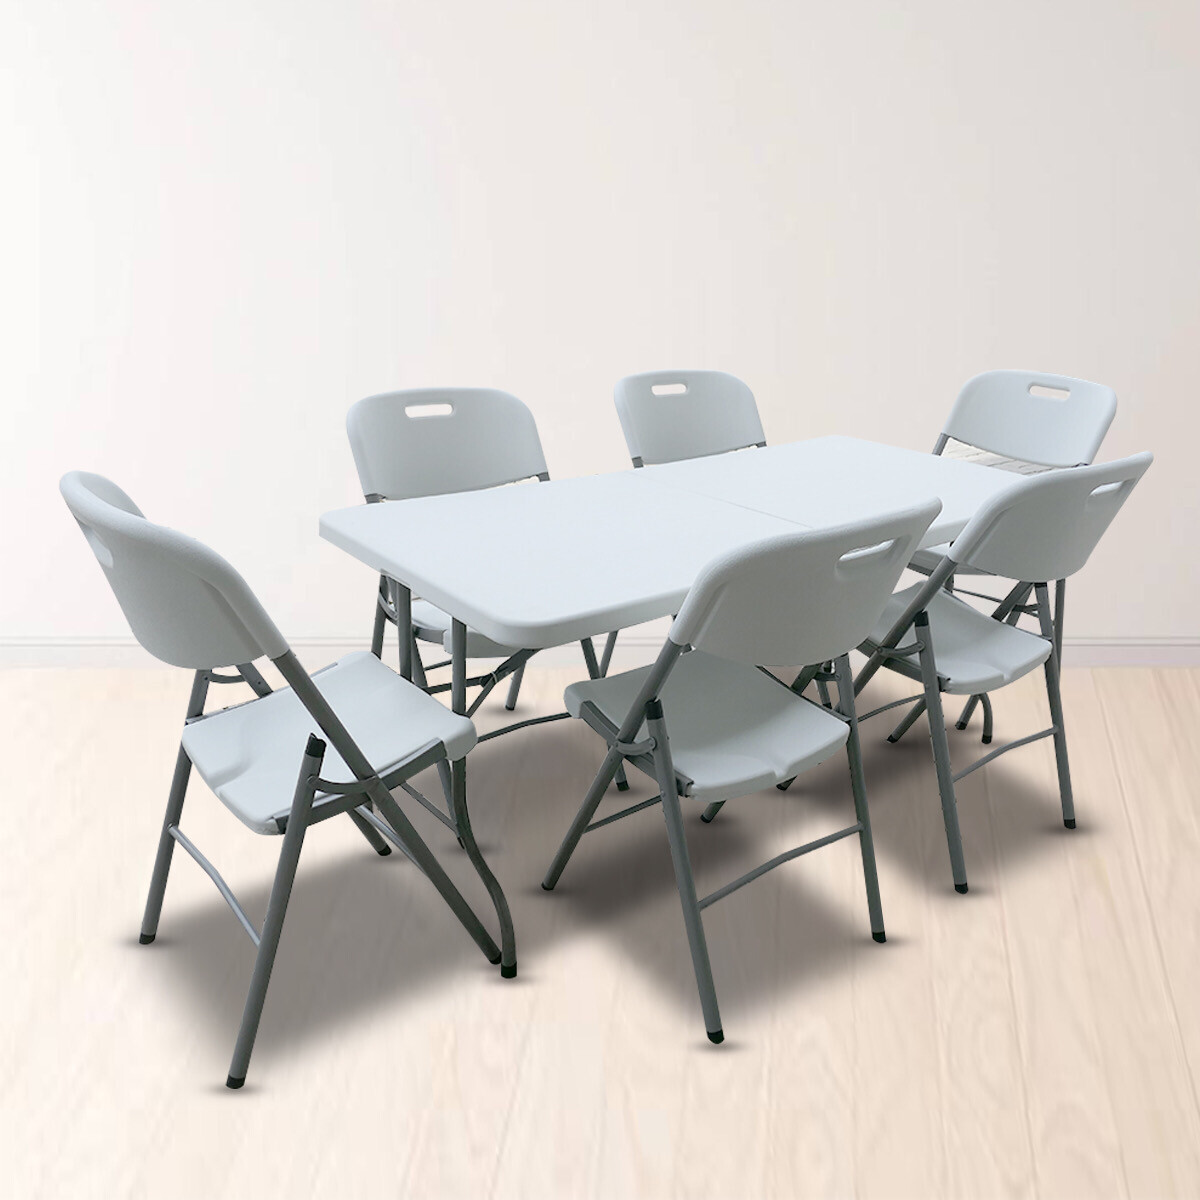 1.5m Rectangular Table + 6 Chairs